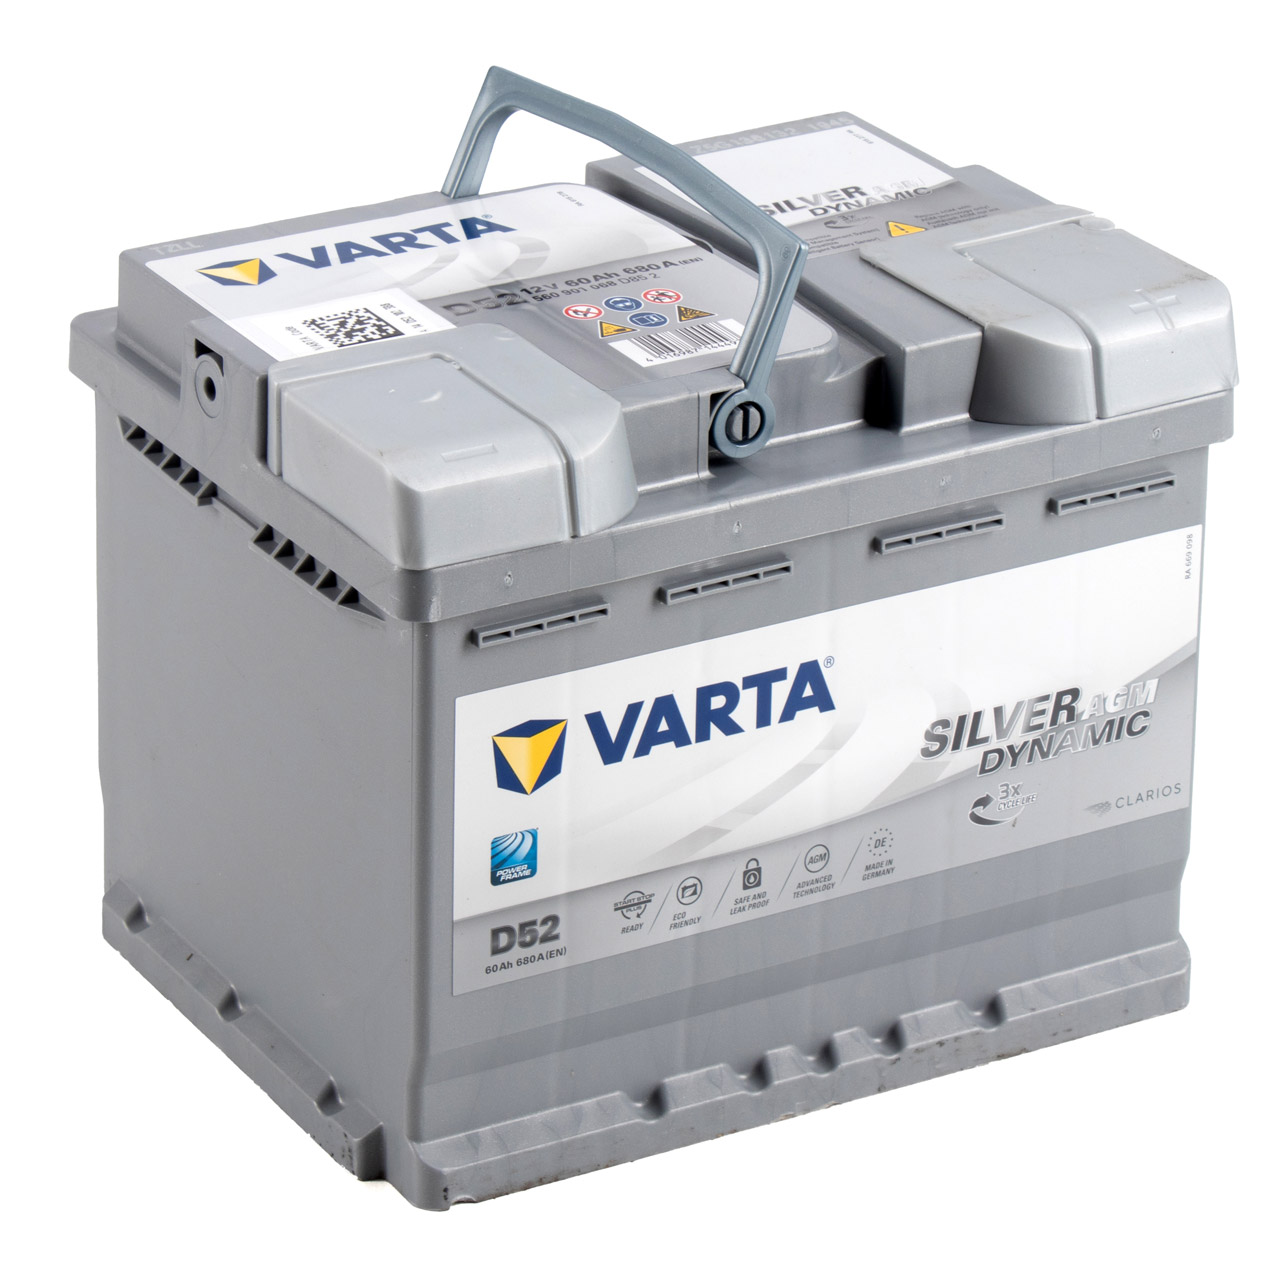 VARTA D52 SILVER dynamic AGM Autobatterie Starterbatterie 12V 60Ah